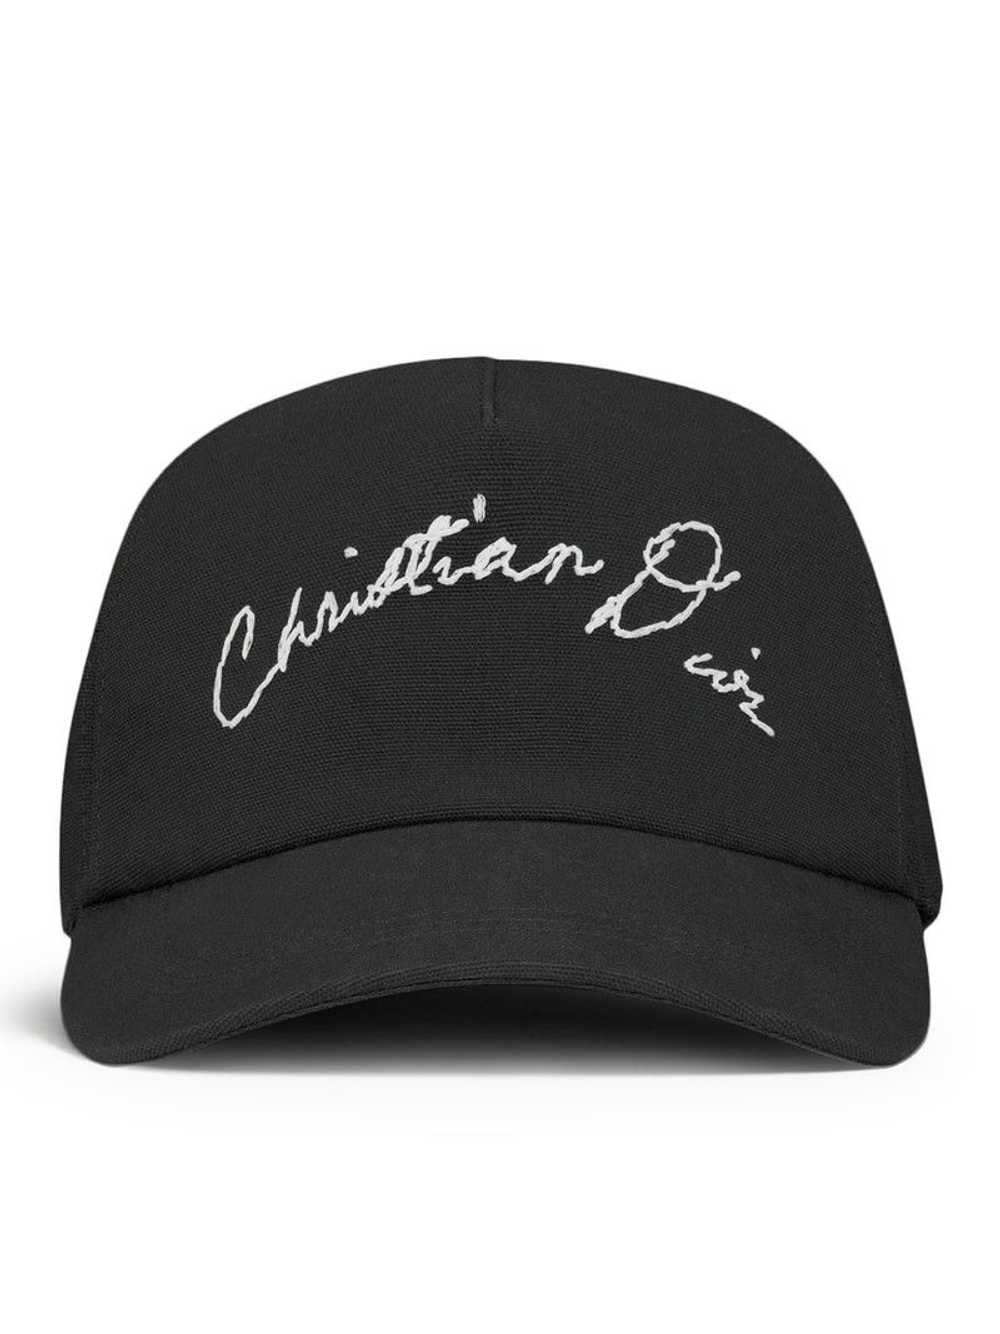 Dior CAP WITH HANDWRITTEN CHRISTIAN DIOR SIGNATURE - image 1